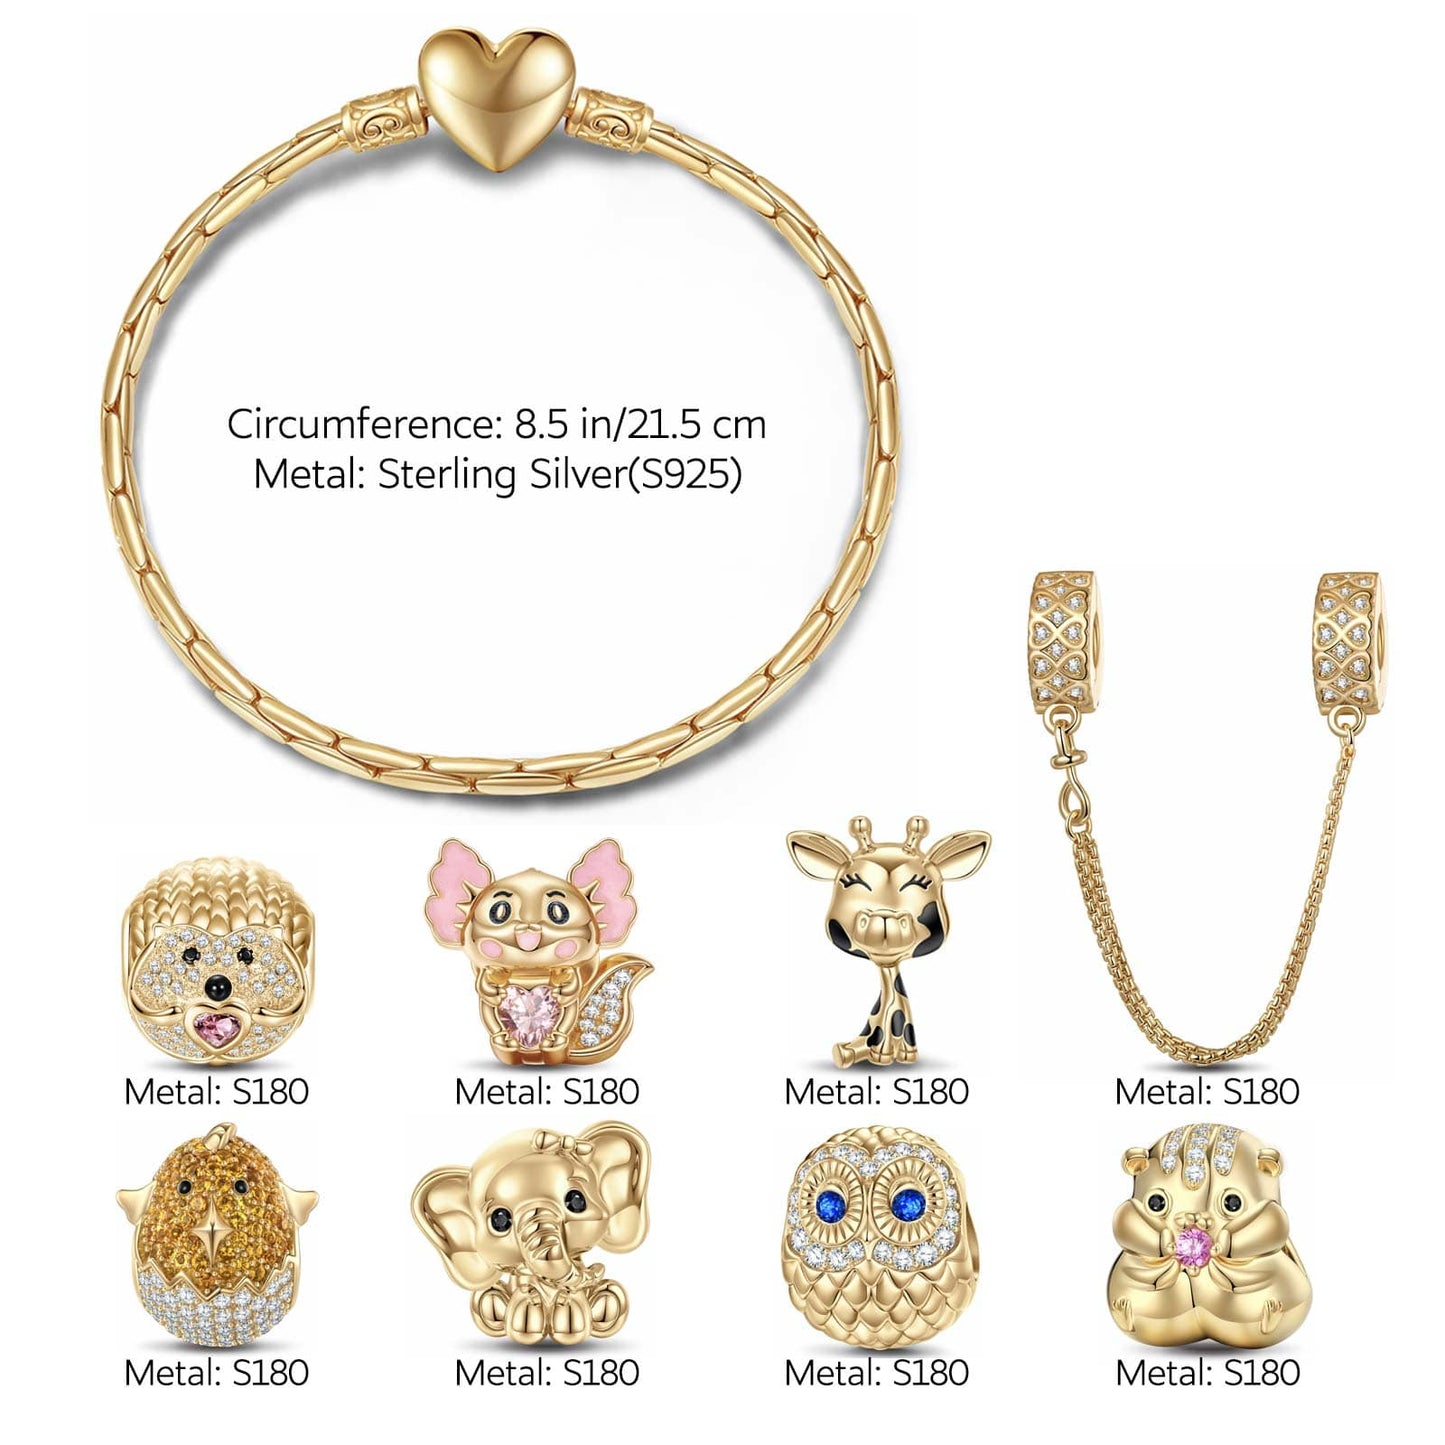 Sterling Silver Innocent Childhood Joy Animals Charms Bracelet Set With Enamel In 14K Gold Plated